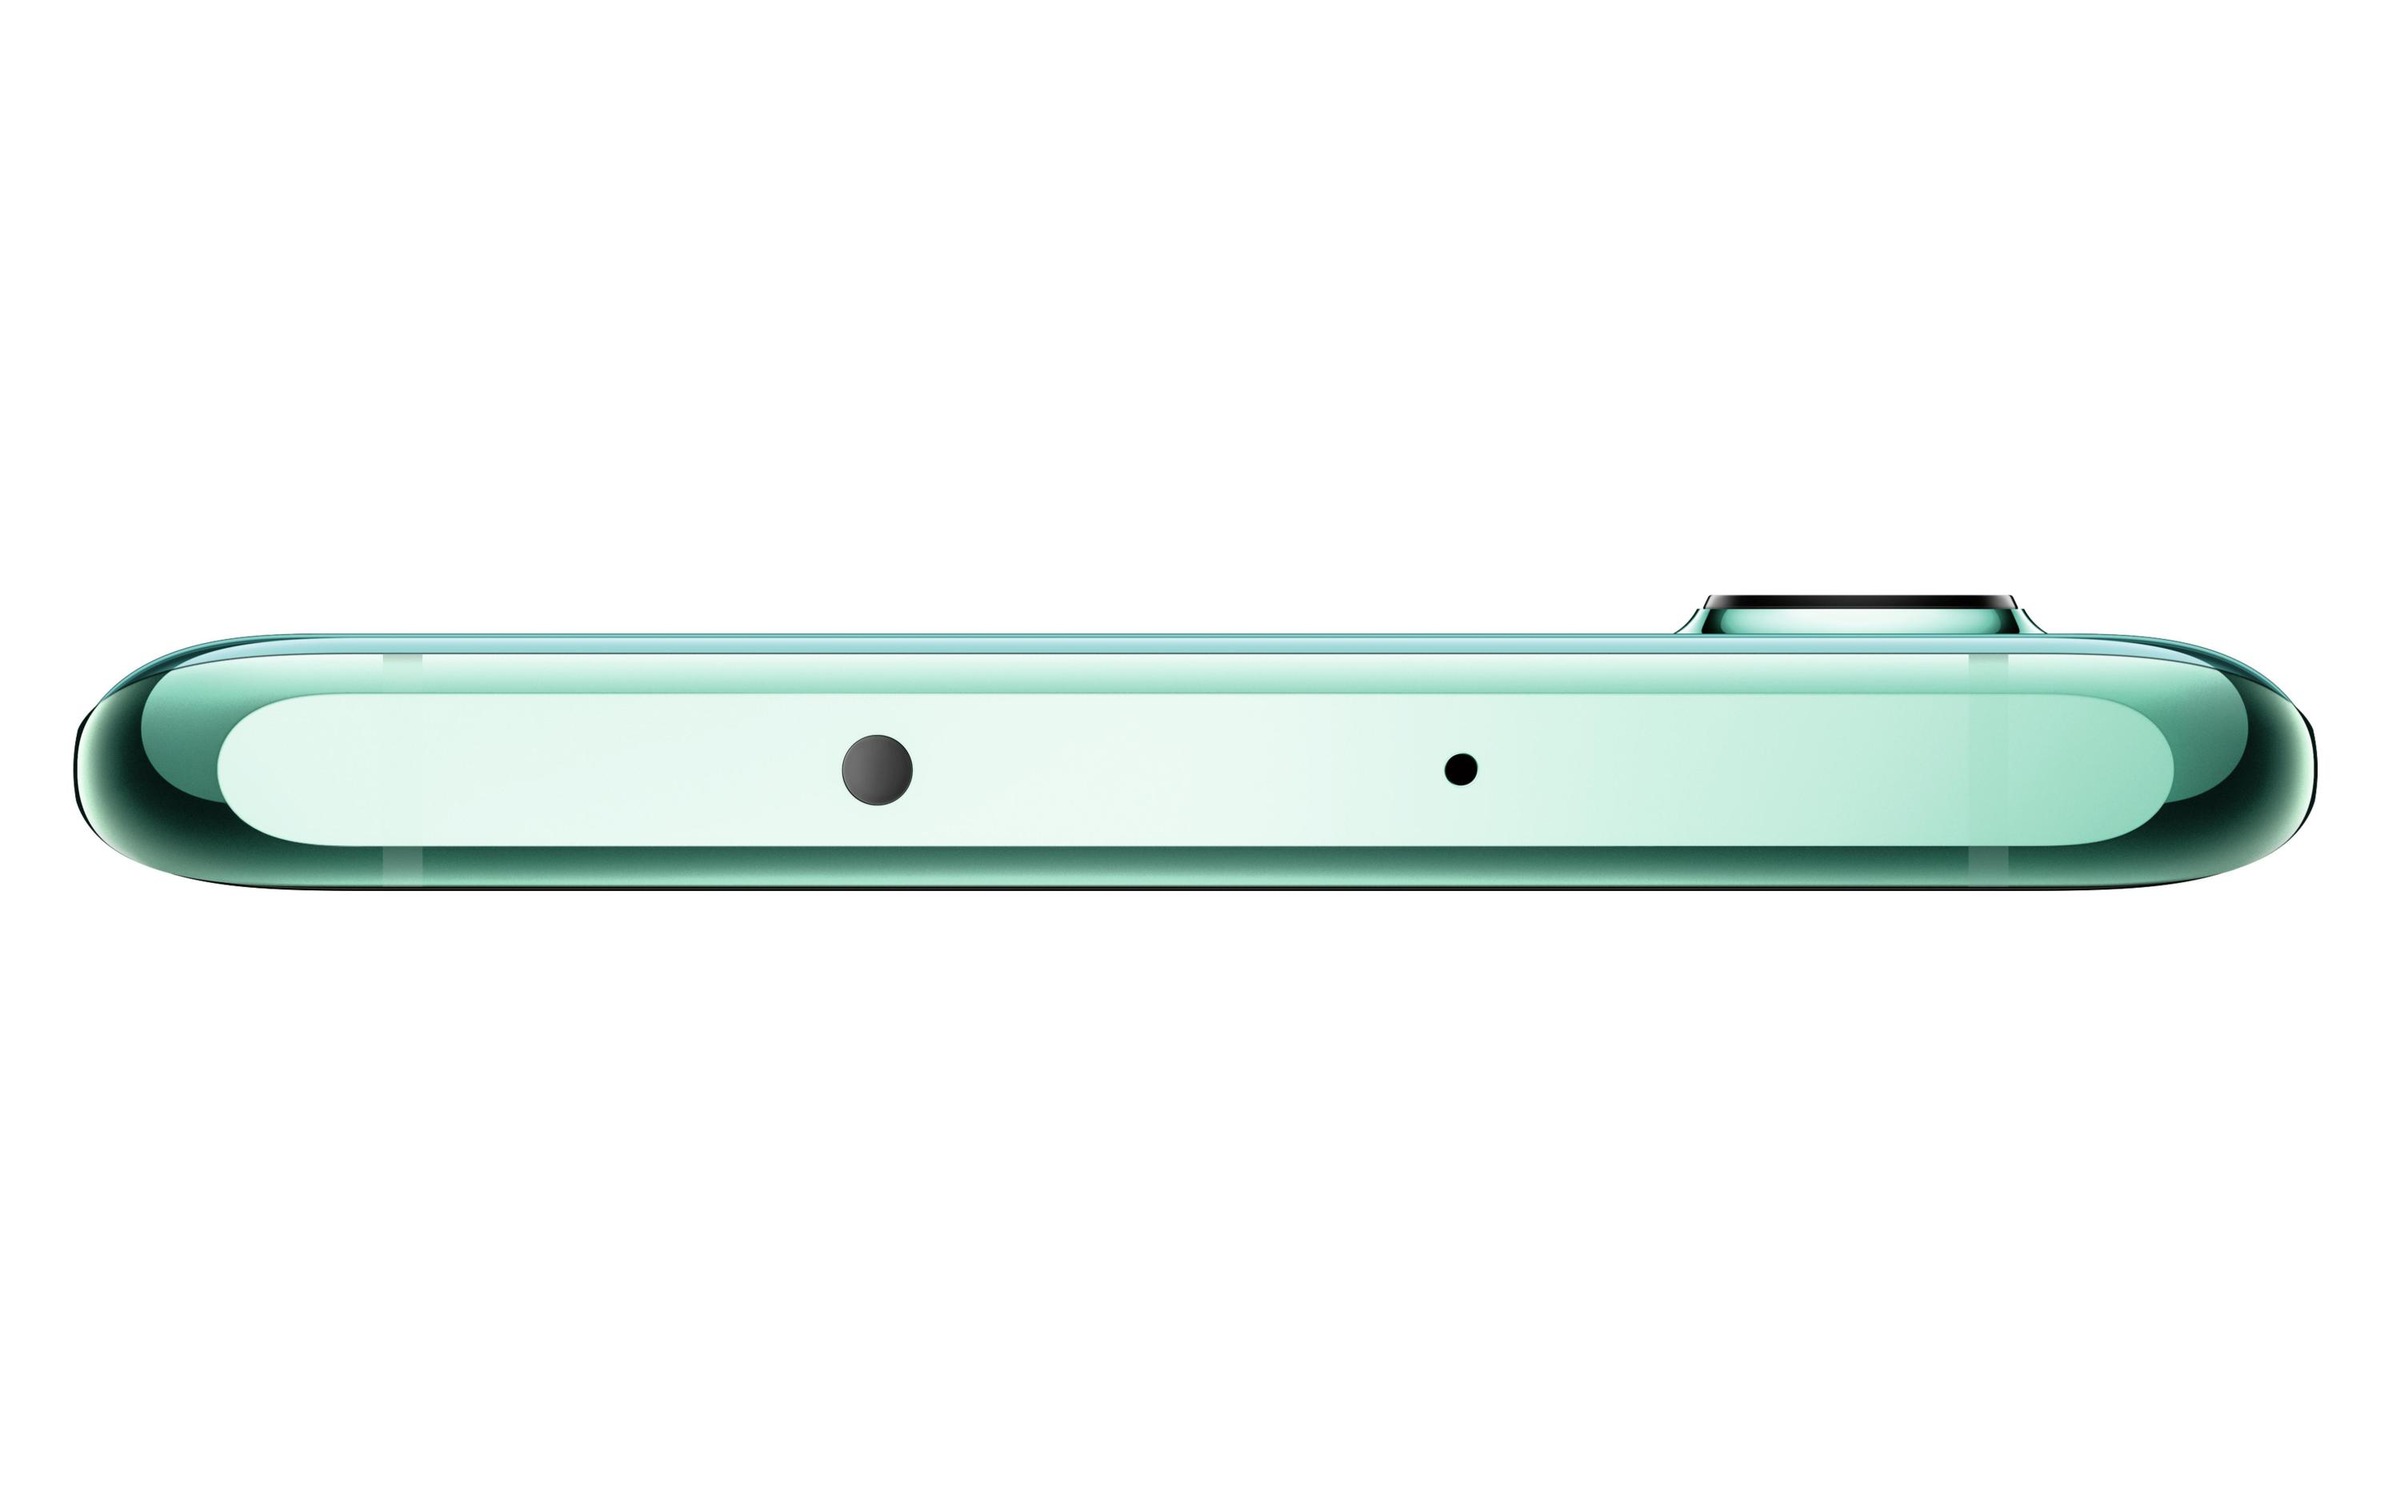 Huawei Smartphone »P30 Pro Aurora Blue«, Aurora Blue/Blau, 16,43 cm/6,47 Zoll, 128 GB Speicherplatz, 40 MP Kamera